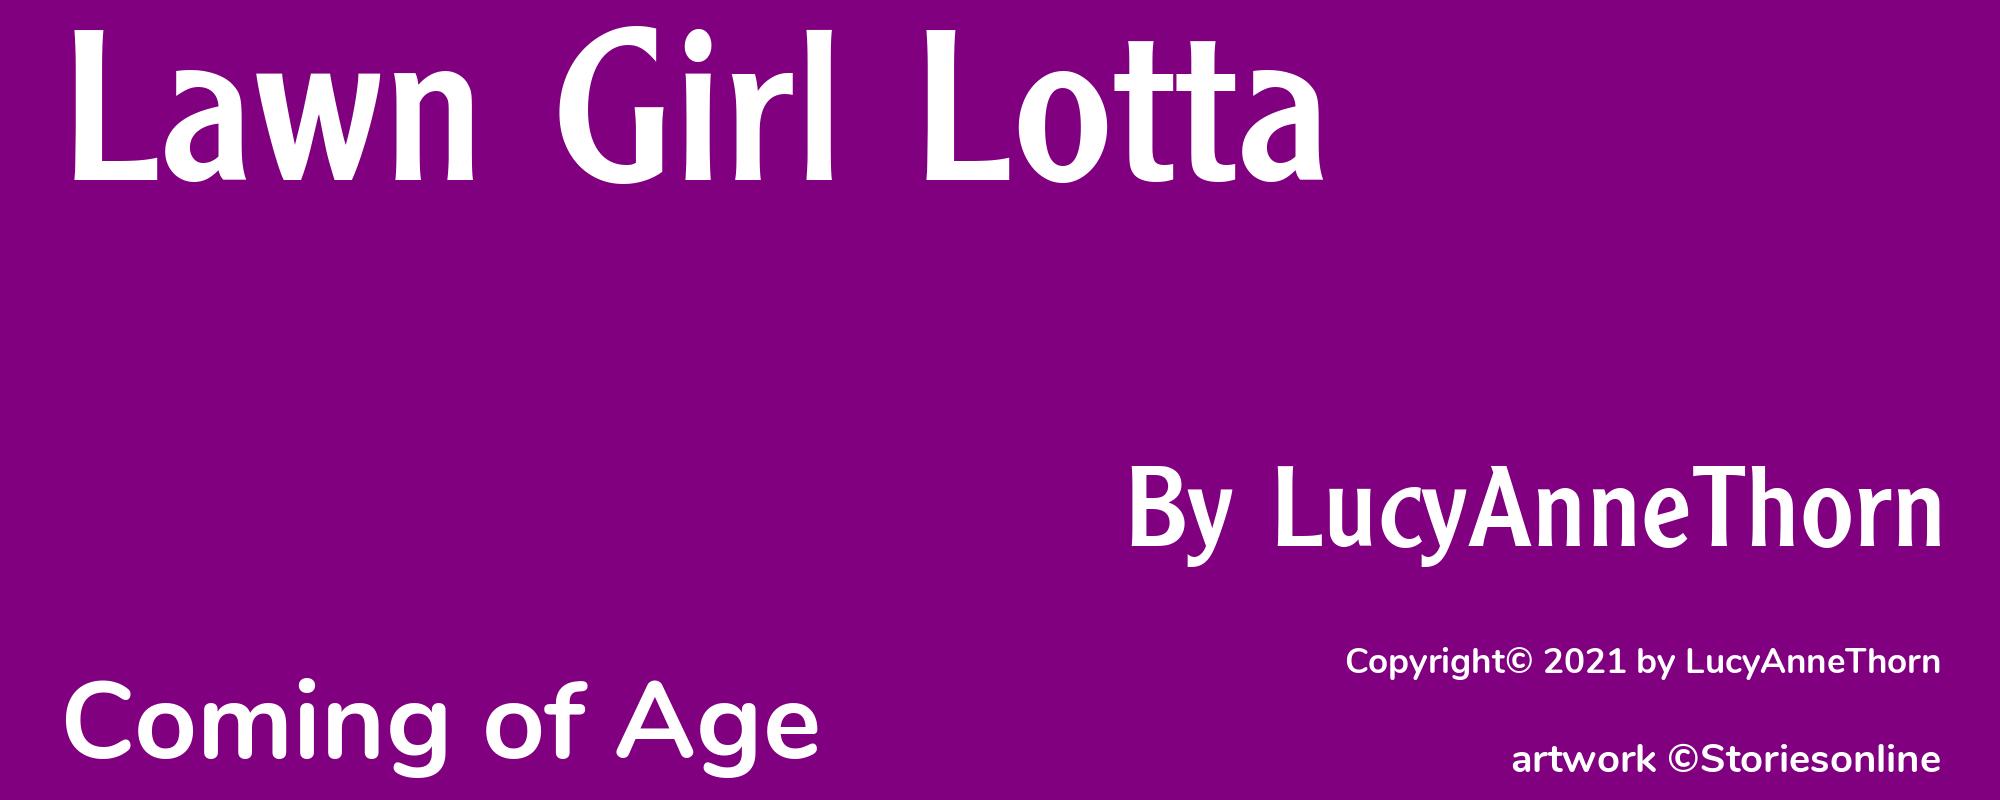 Lawn Girl Lotta - Cover